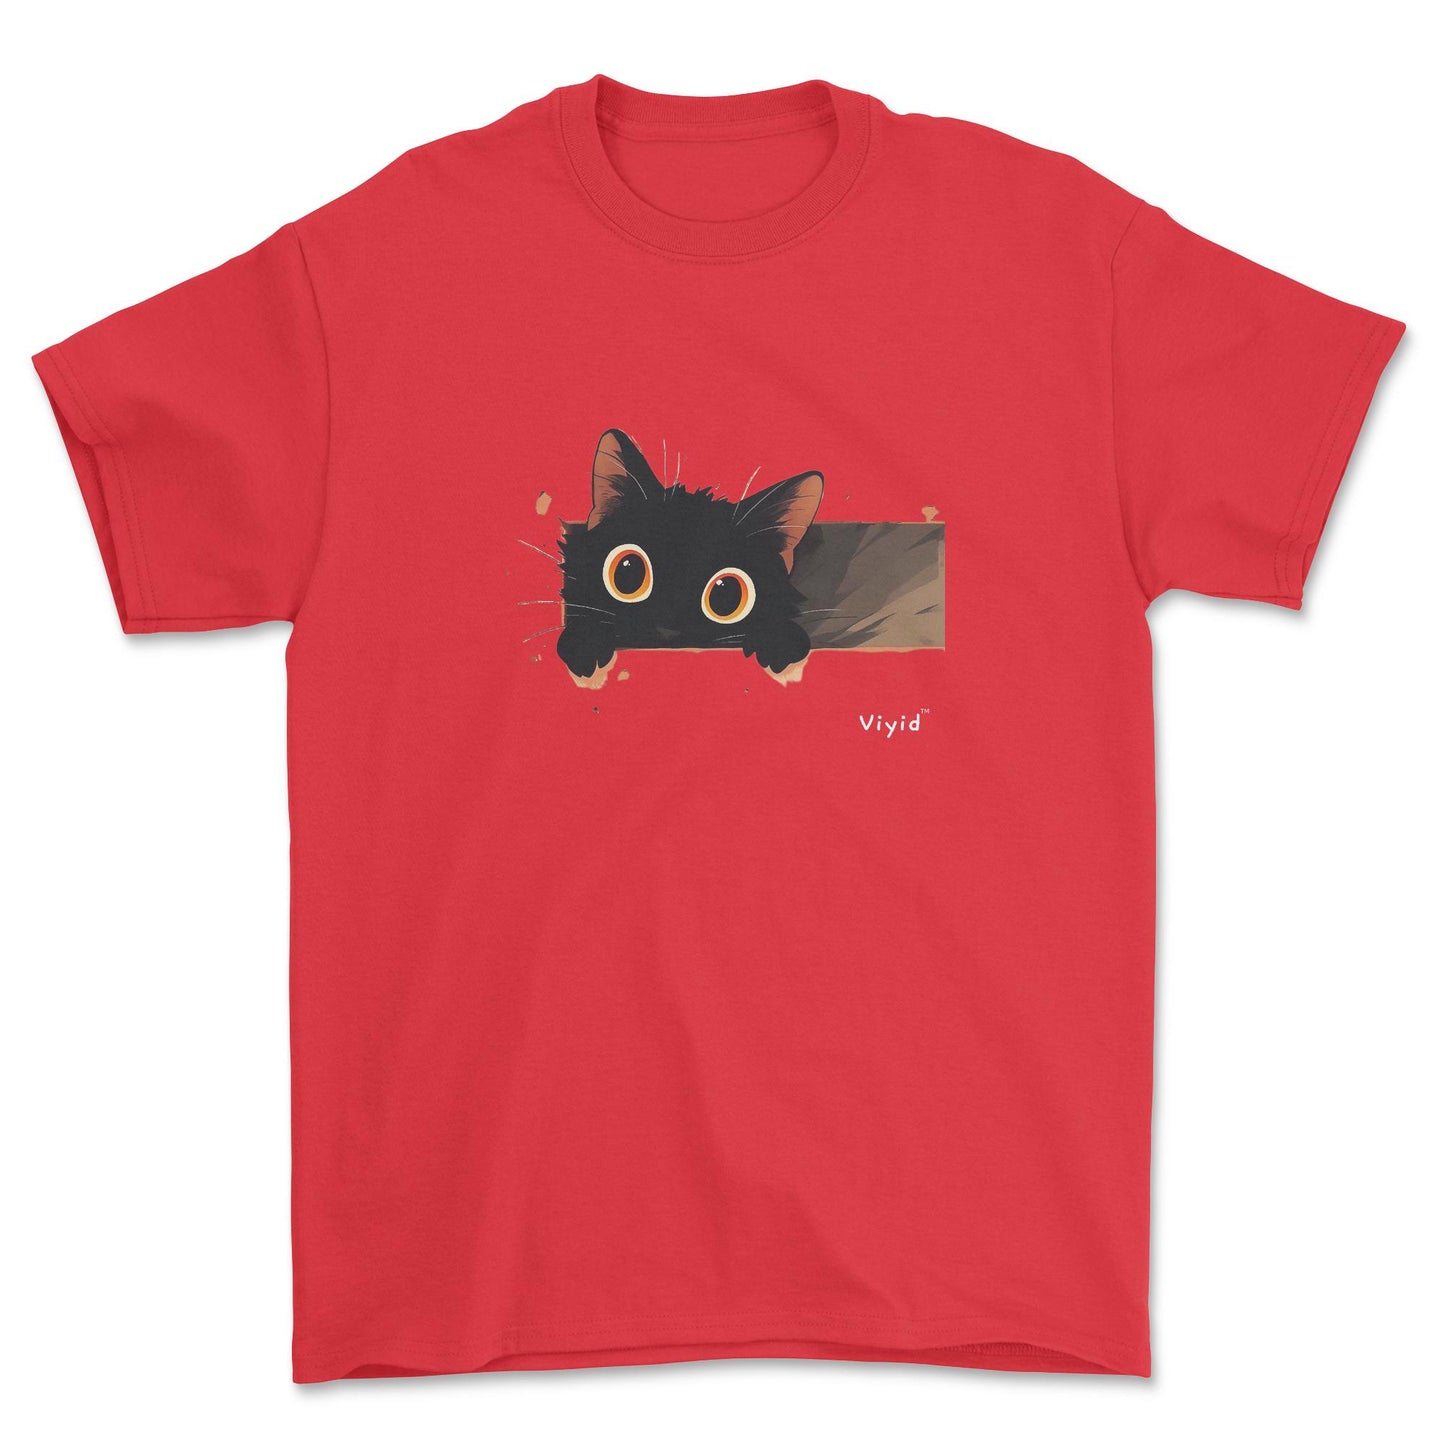 Peeping black cat youth t-shirt red